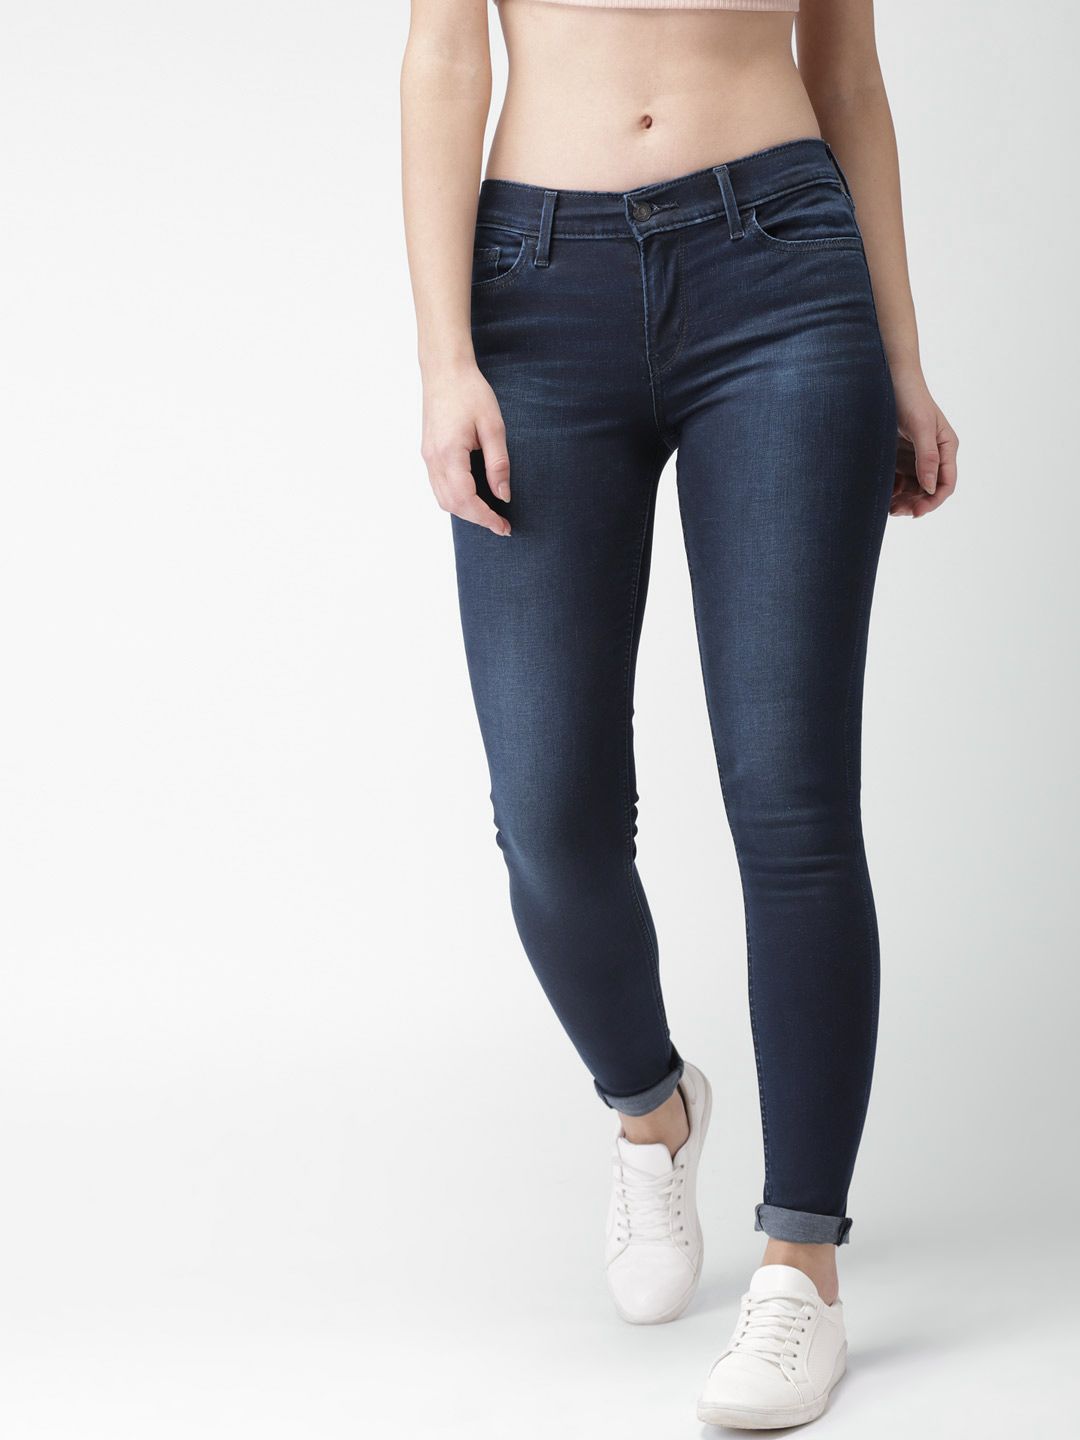 jeans women levis